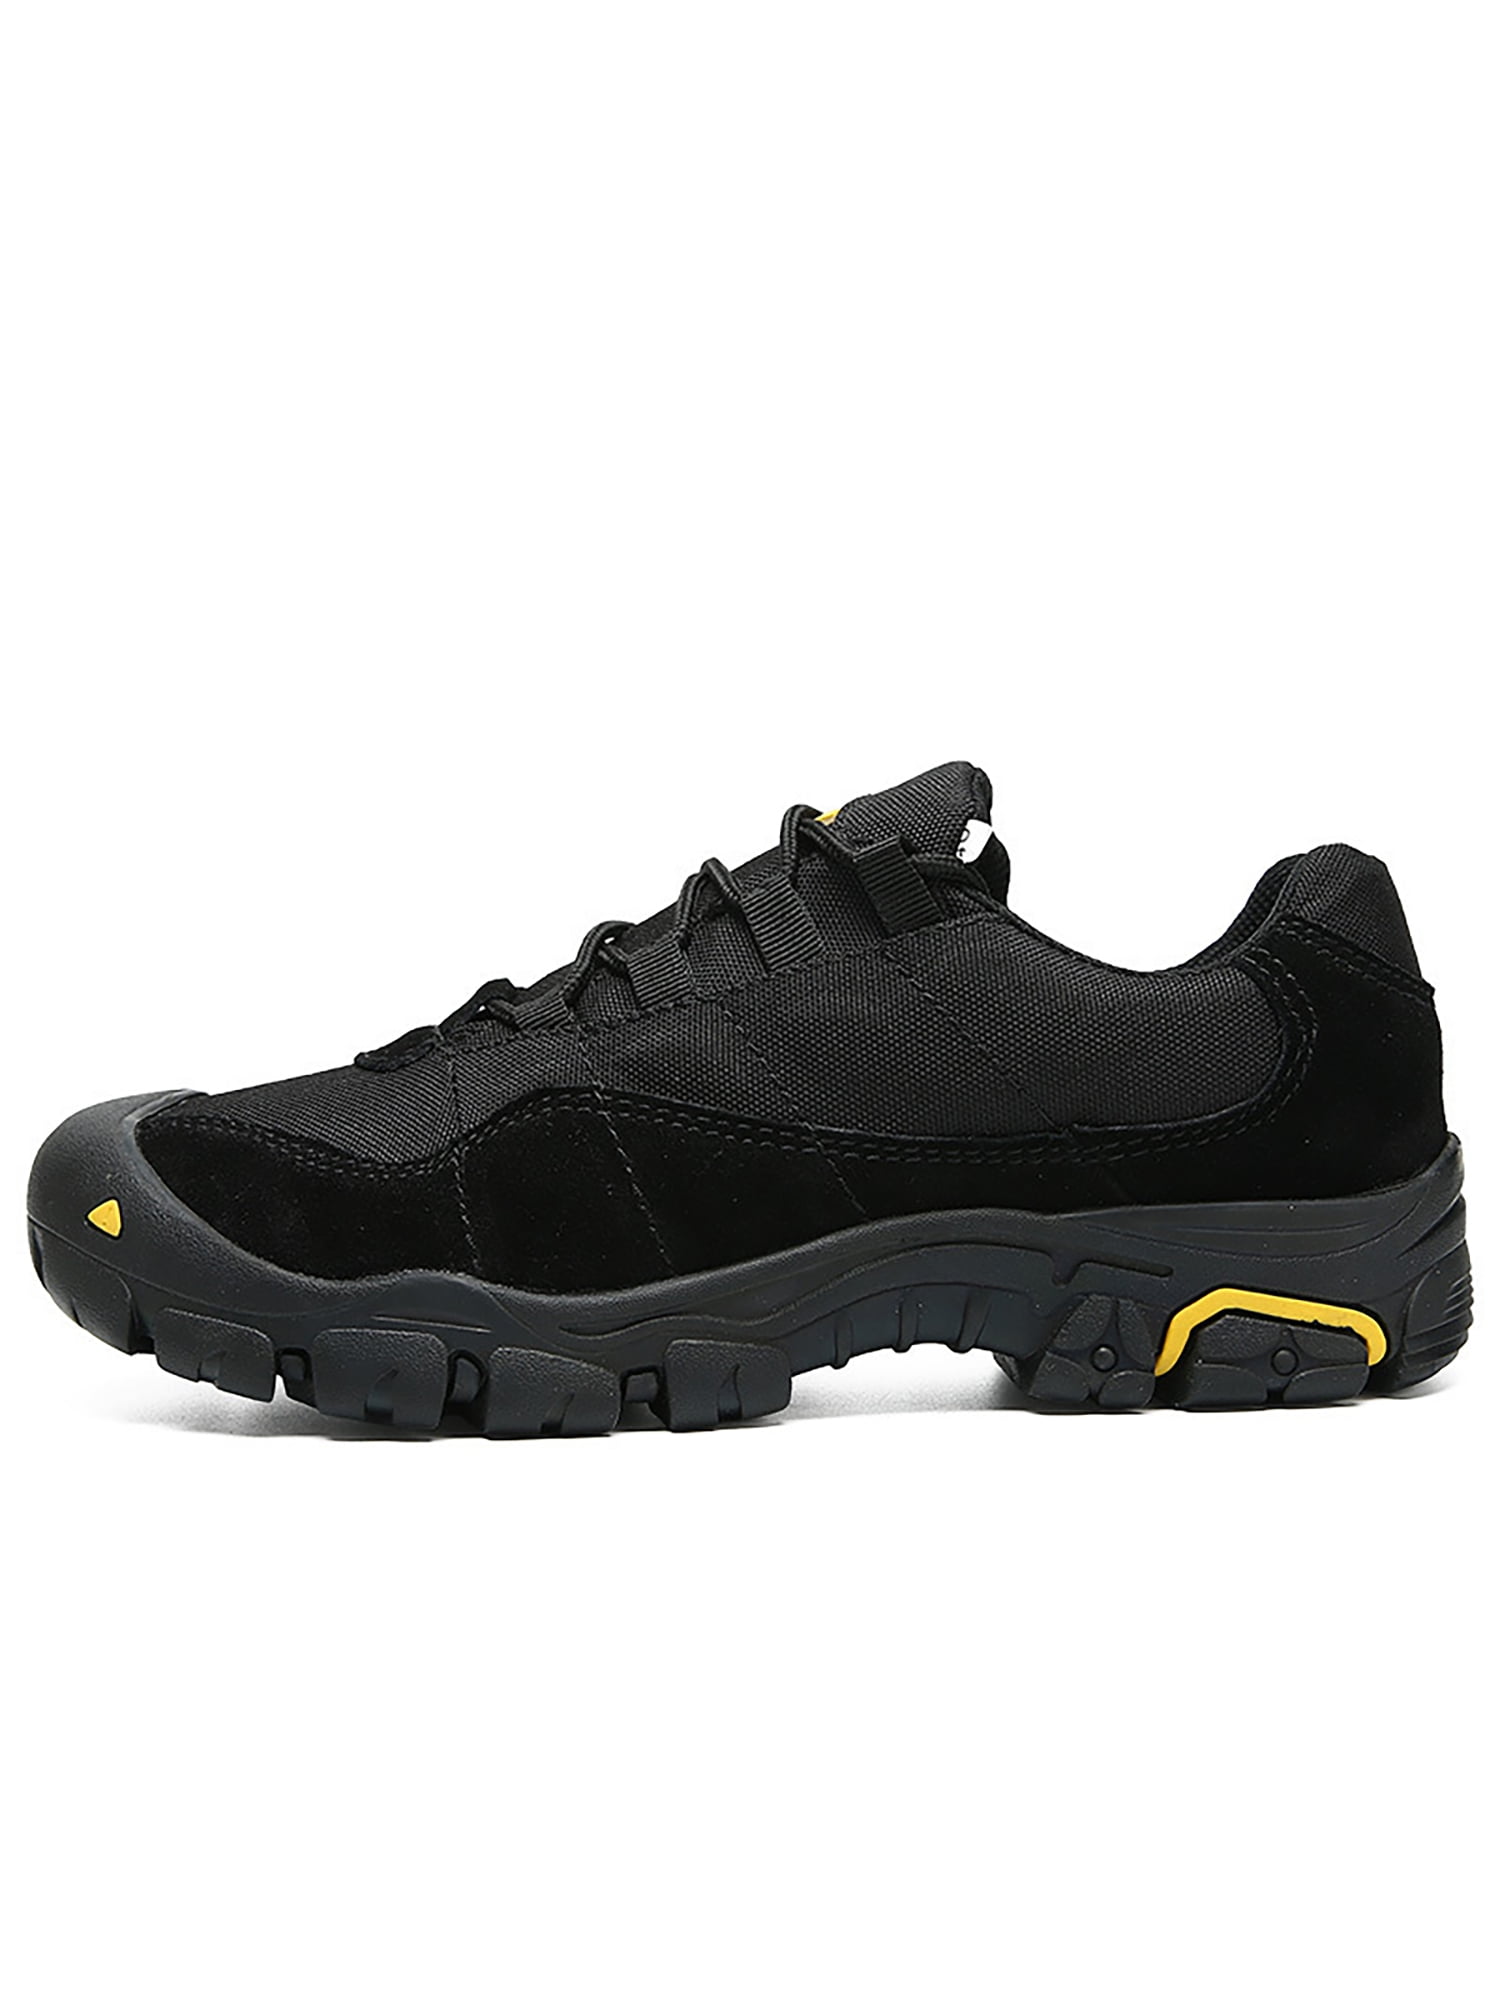 Mens Outdoor Hiking Climbing Sneakers Shoes Flats Walking Sports Non-slip 45 L